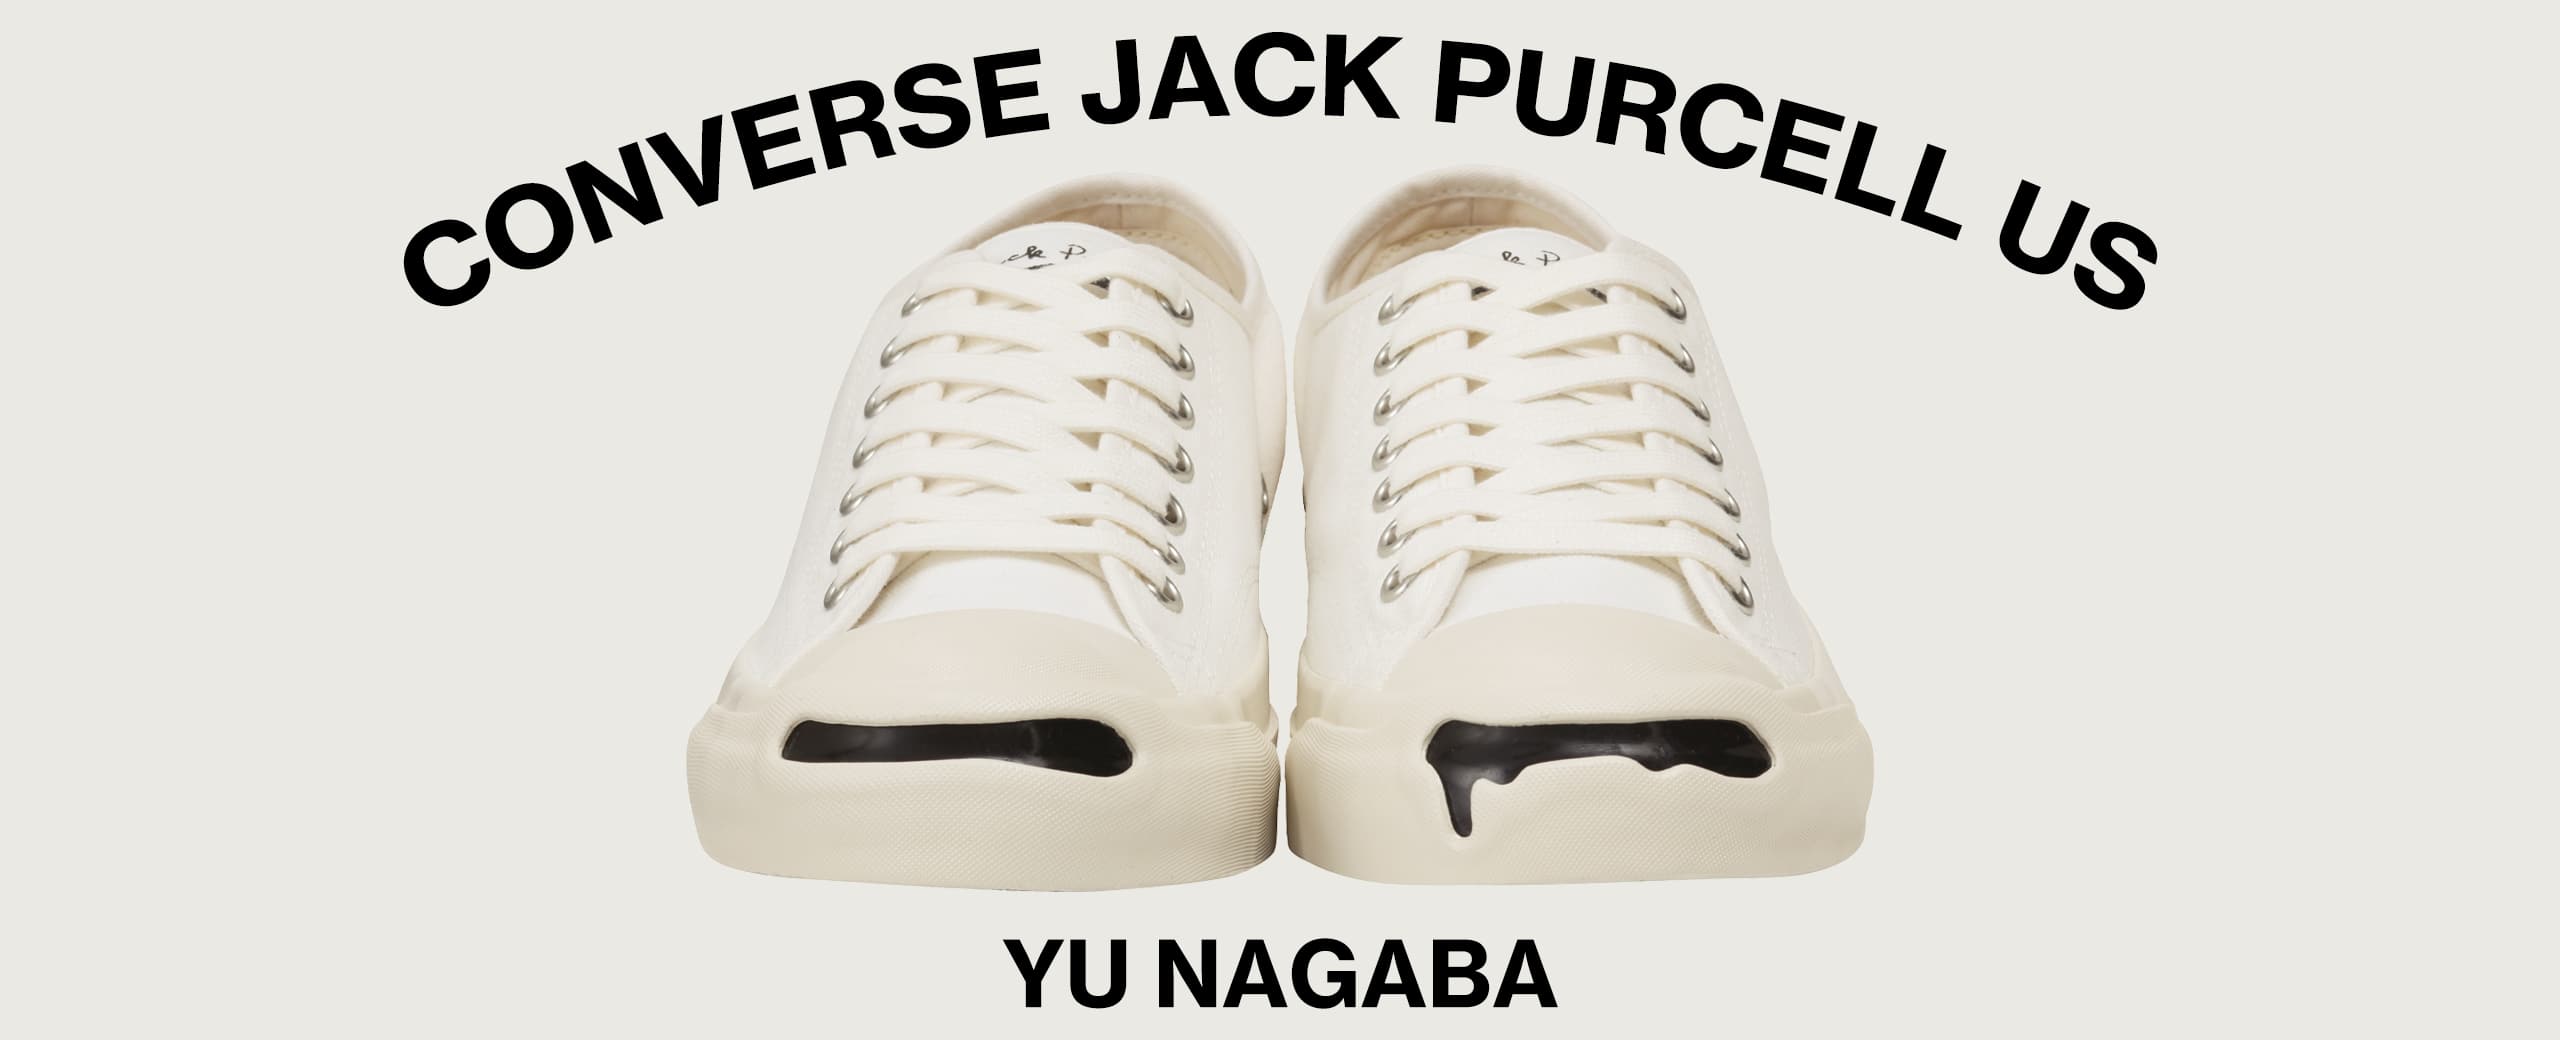 "CONVERSE JACK PURCELL US YU NAGABA"